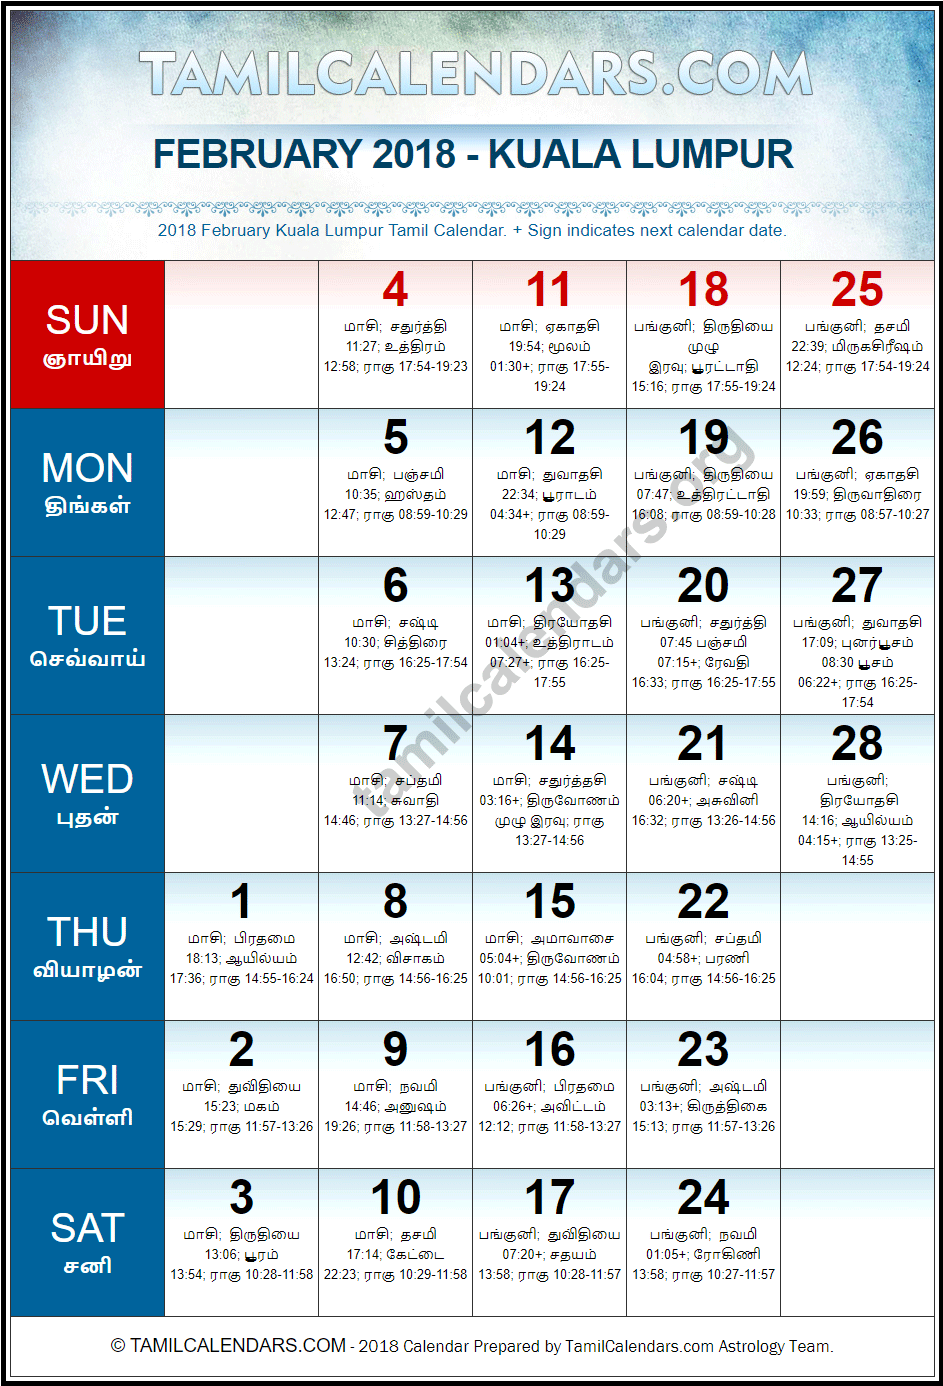 February 2018 Tamil Calendar for Malaysia (Kuala Lumpur)